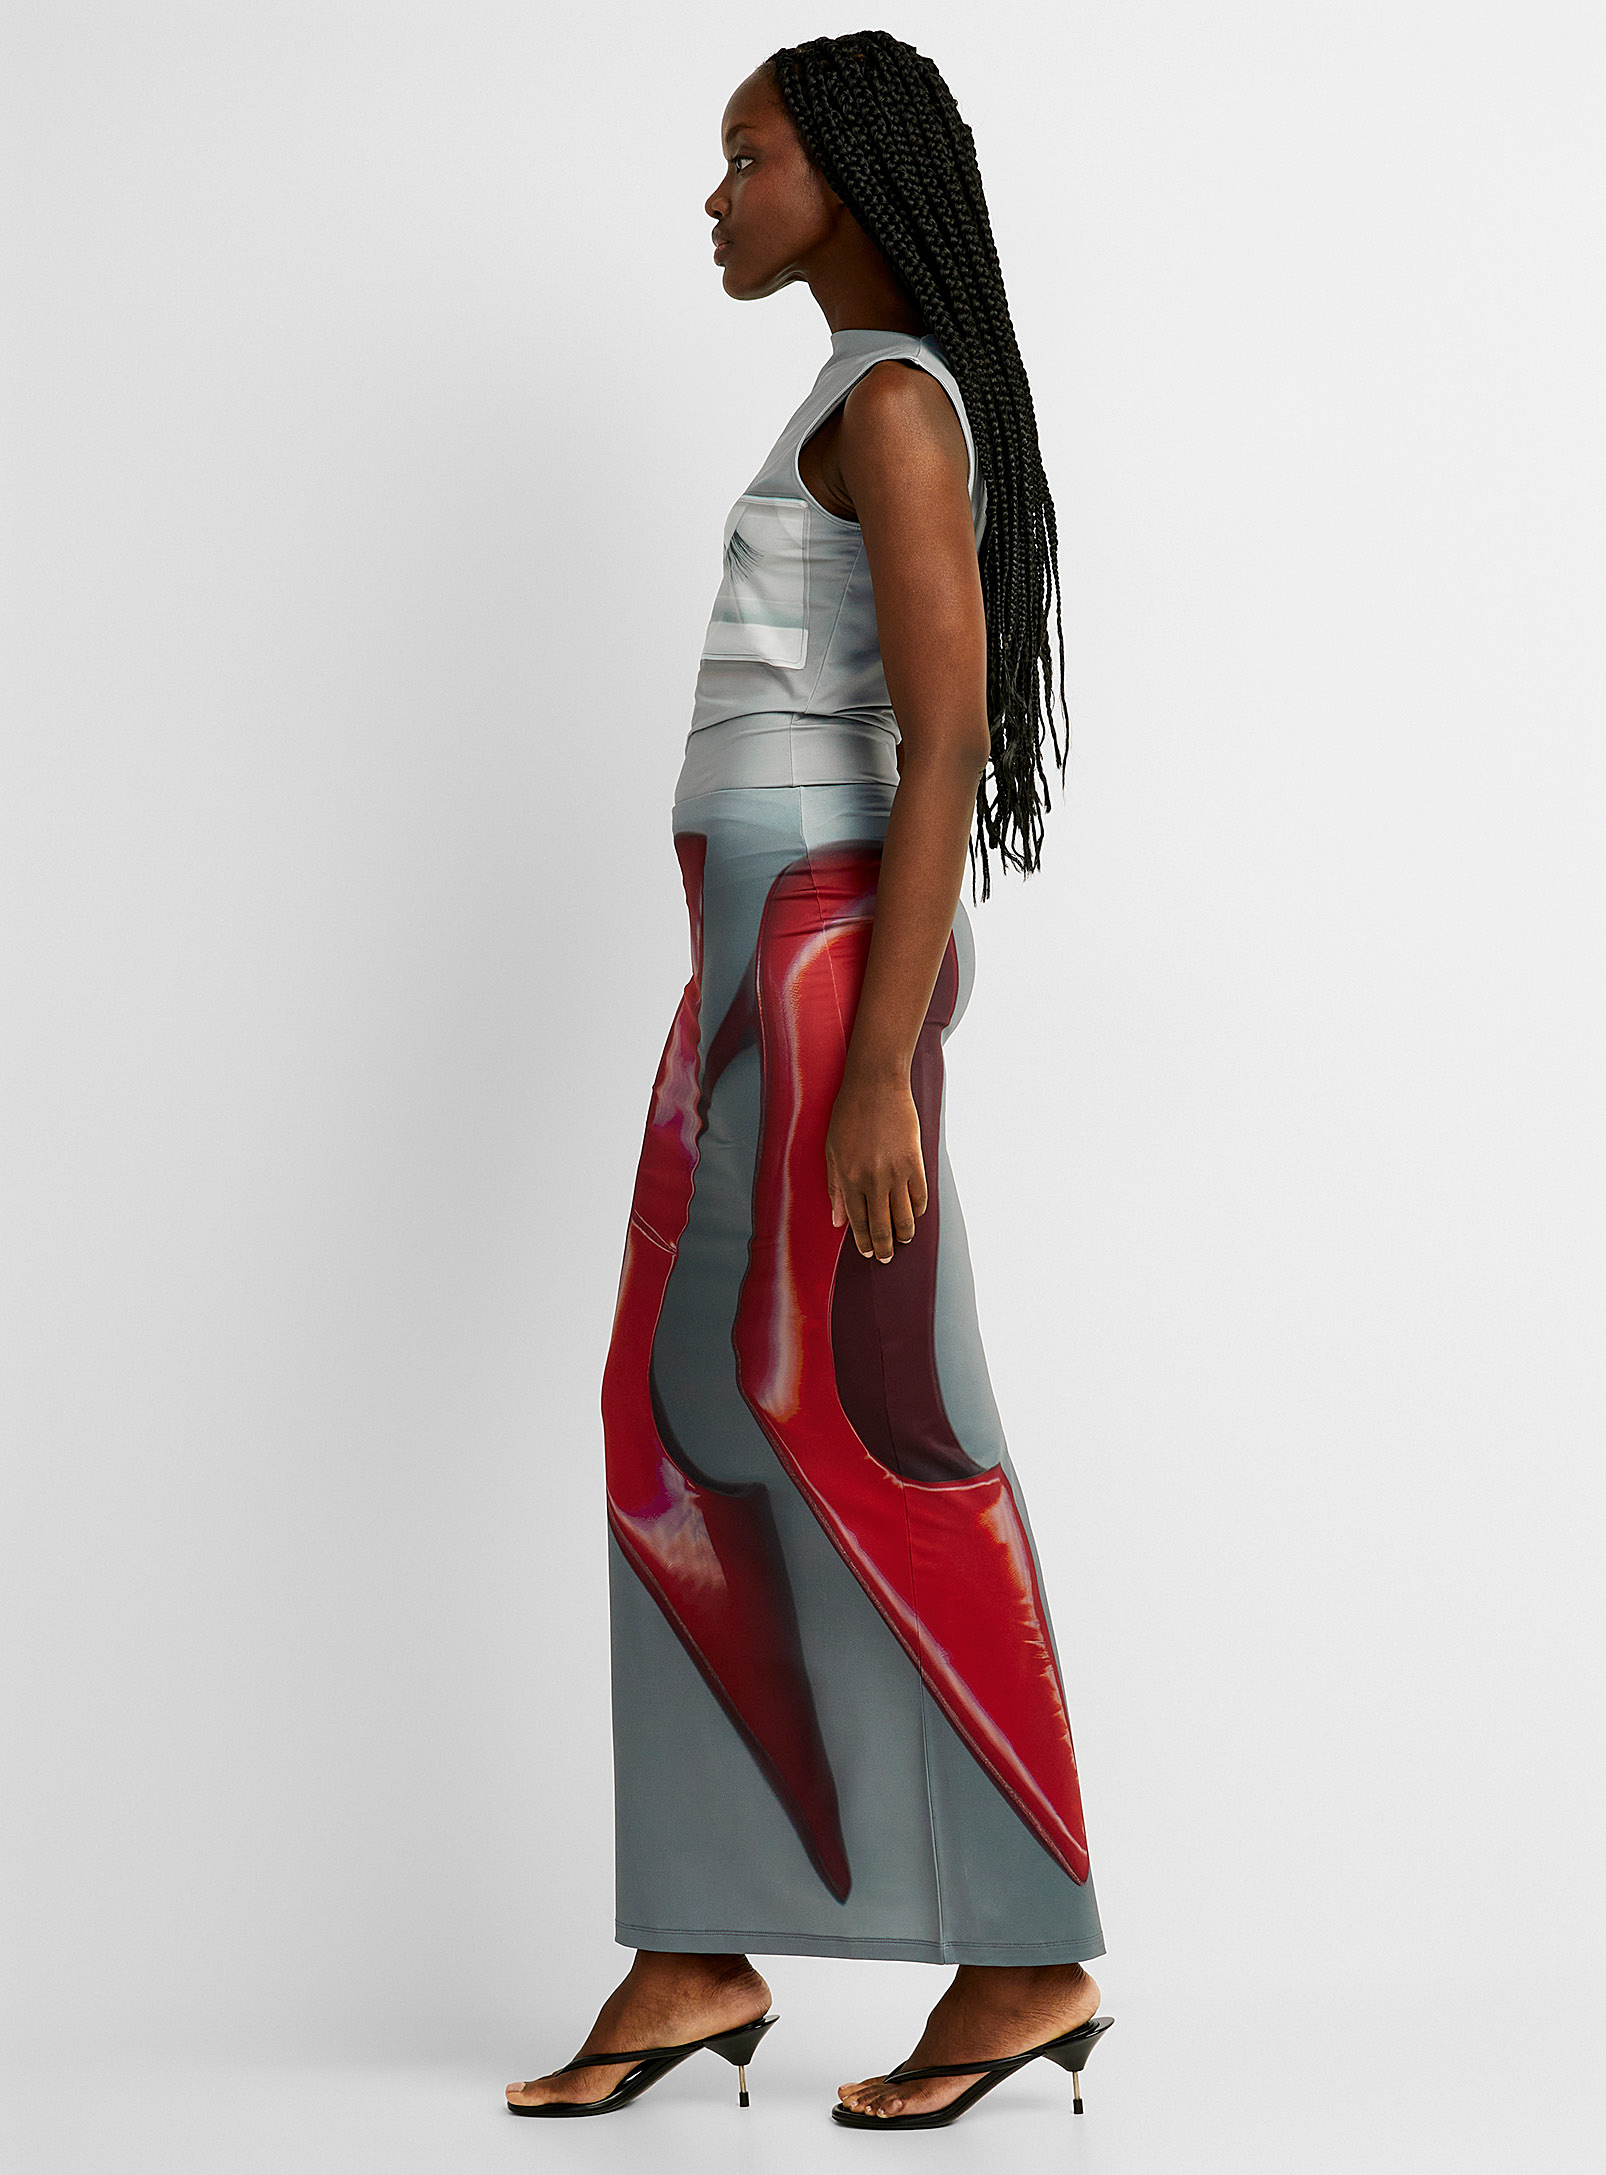 Acne Studios - Women's Red pumps skirt